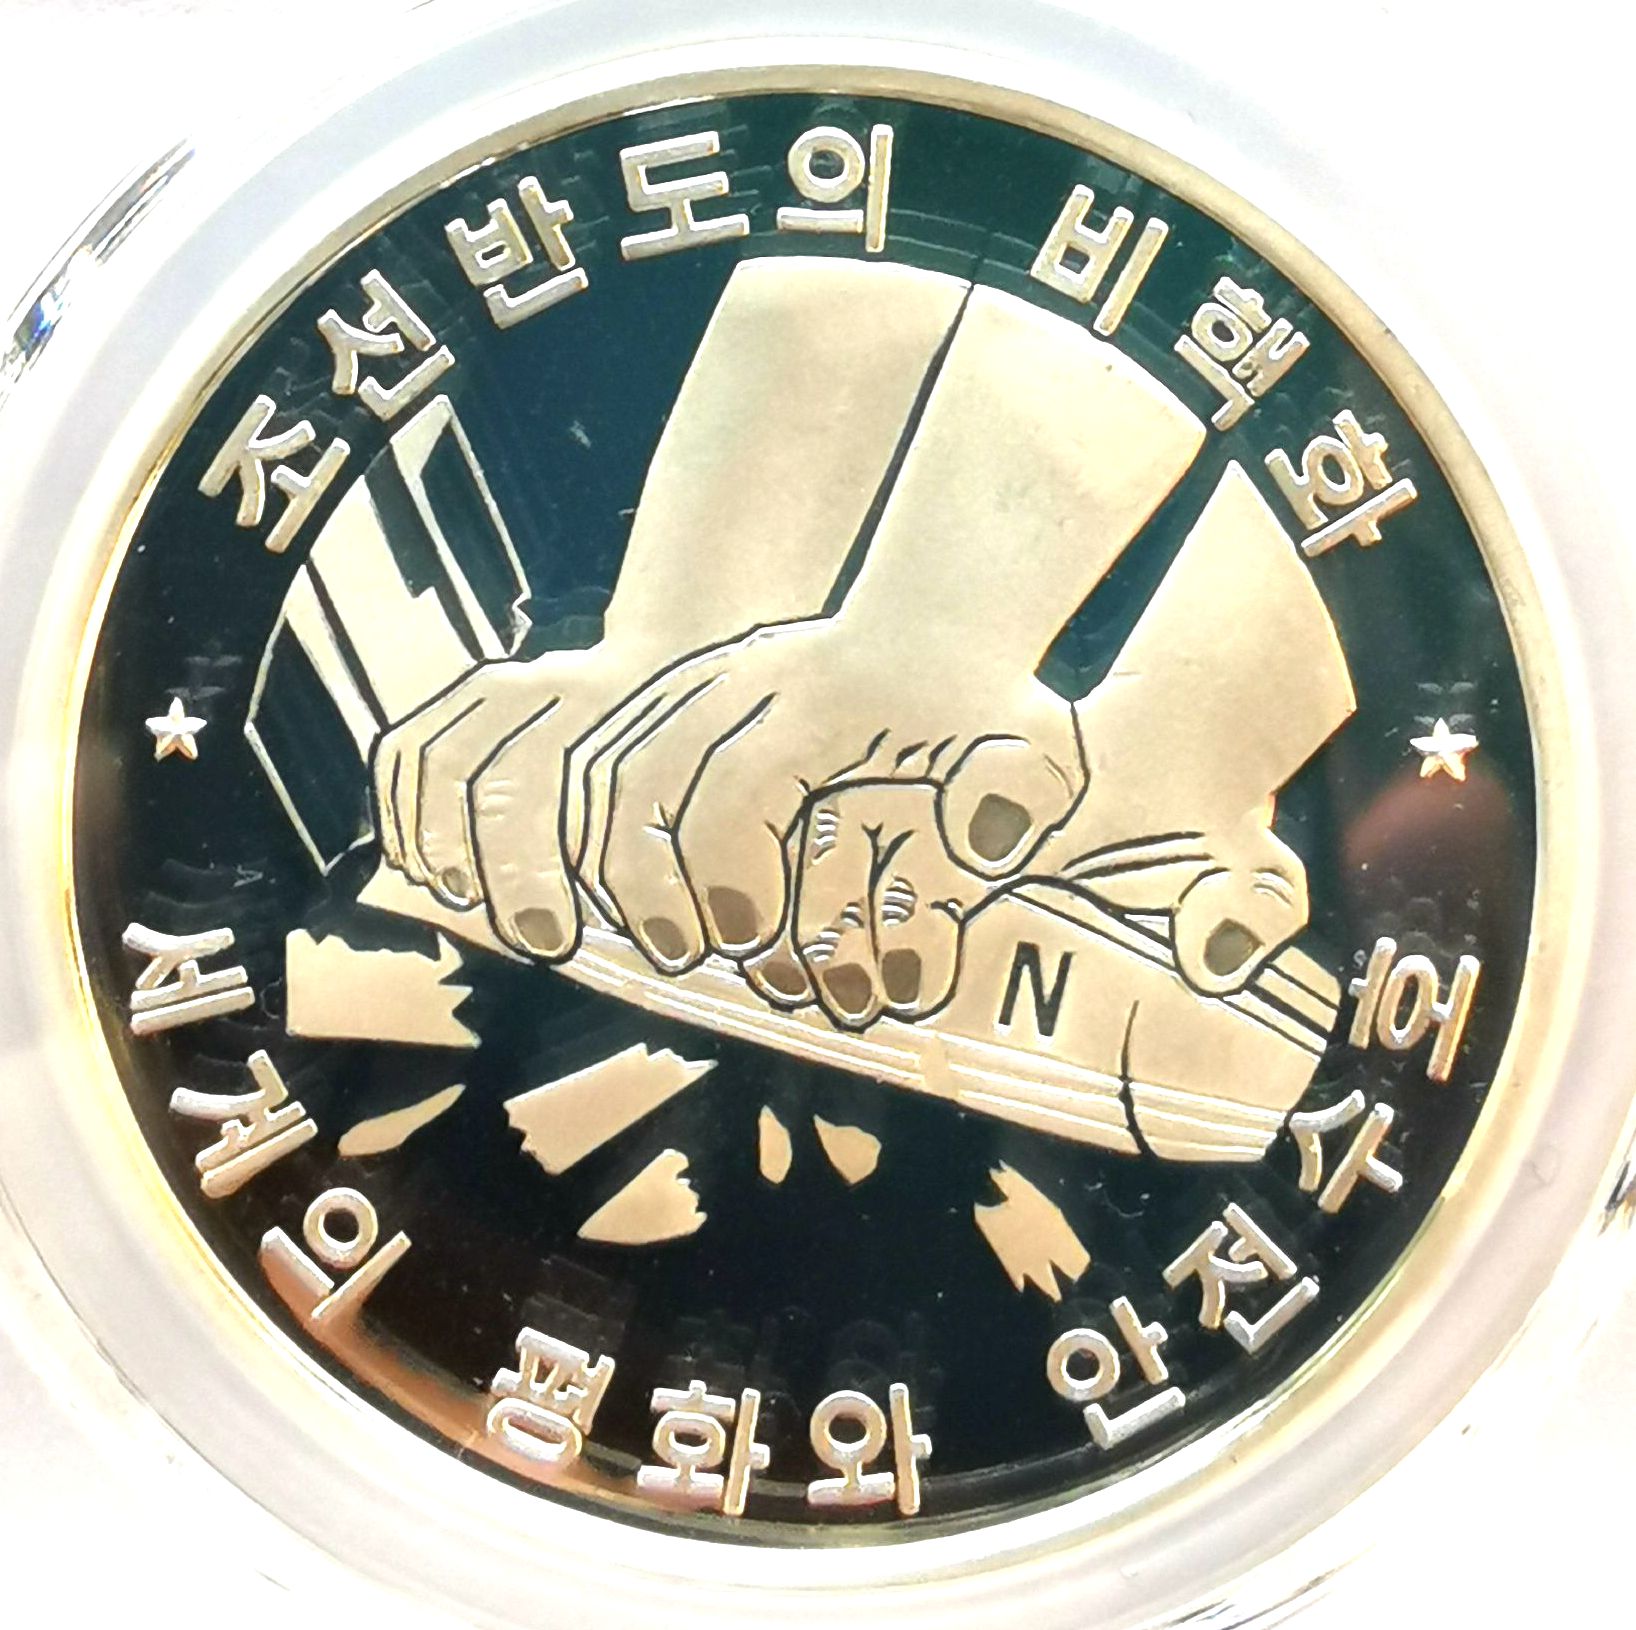 L3618, Korea "Korean Denuclearization" Silver Coin 2019, PCGS PR69 - Click Image to Close